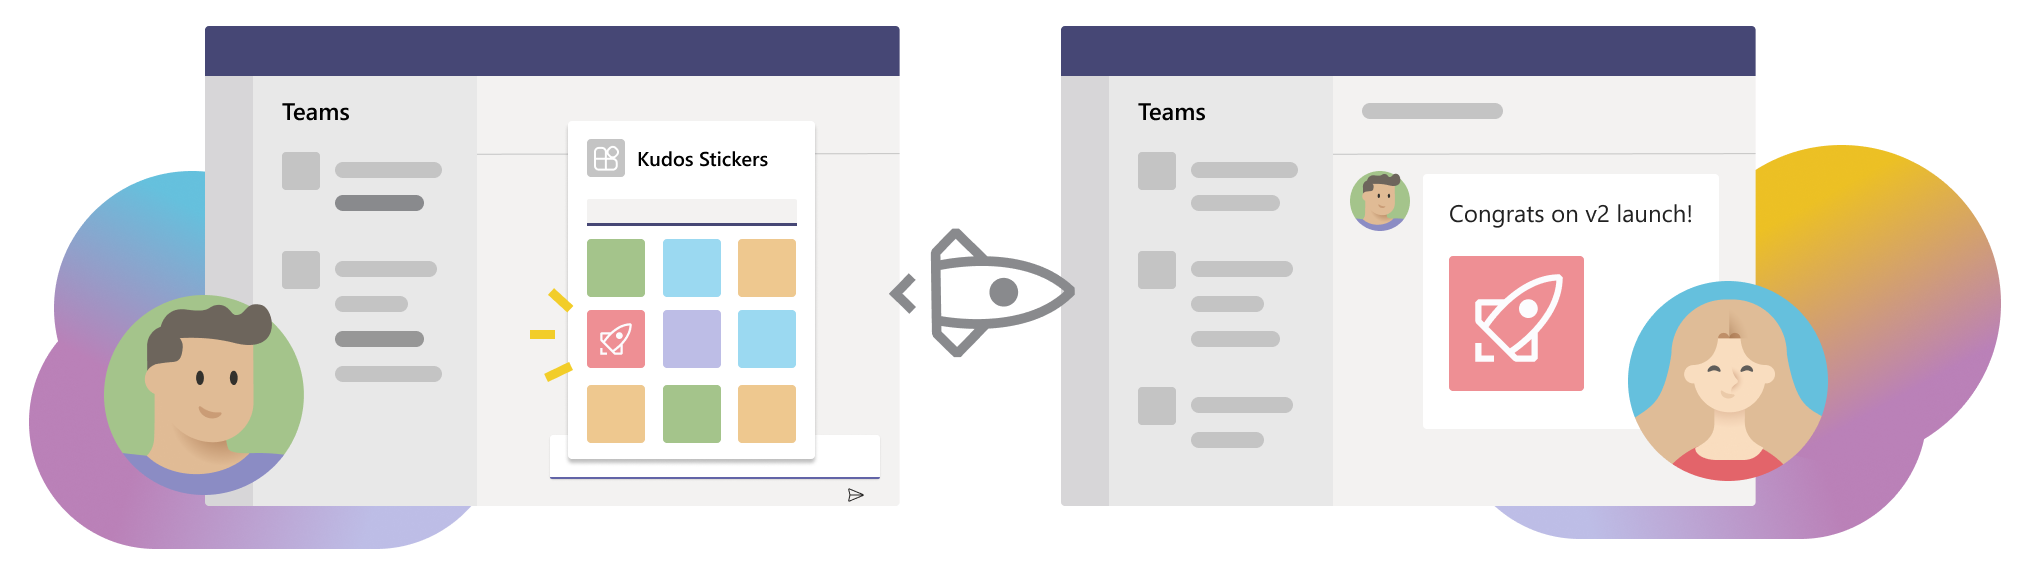 Teams app for building team culture